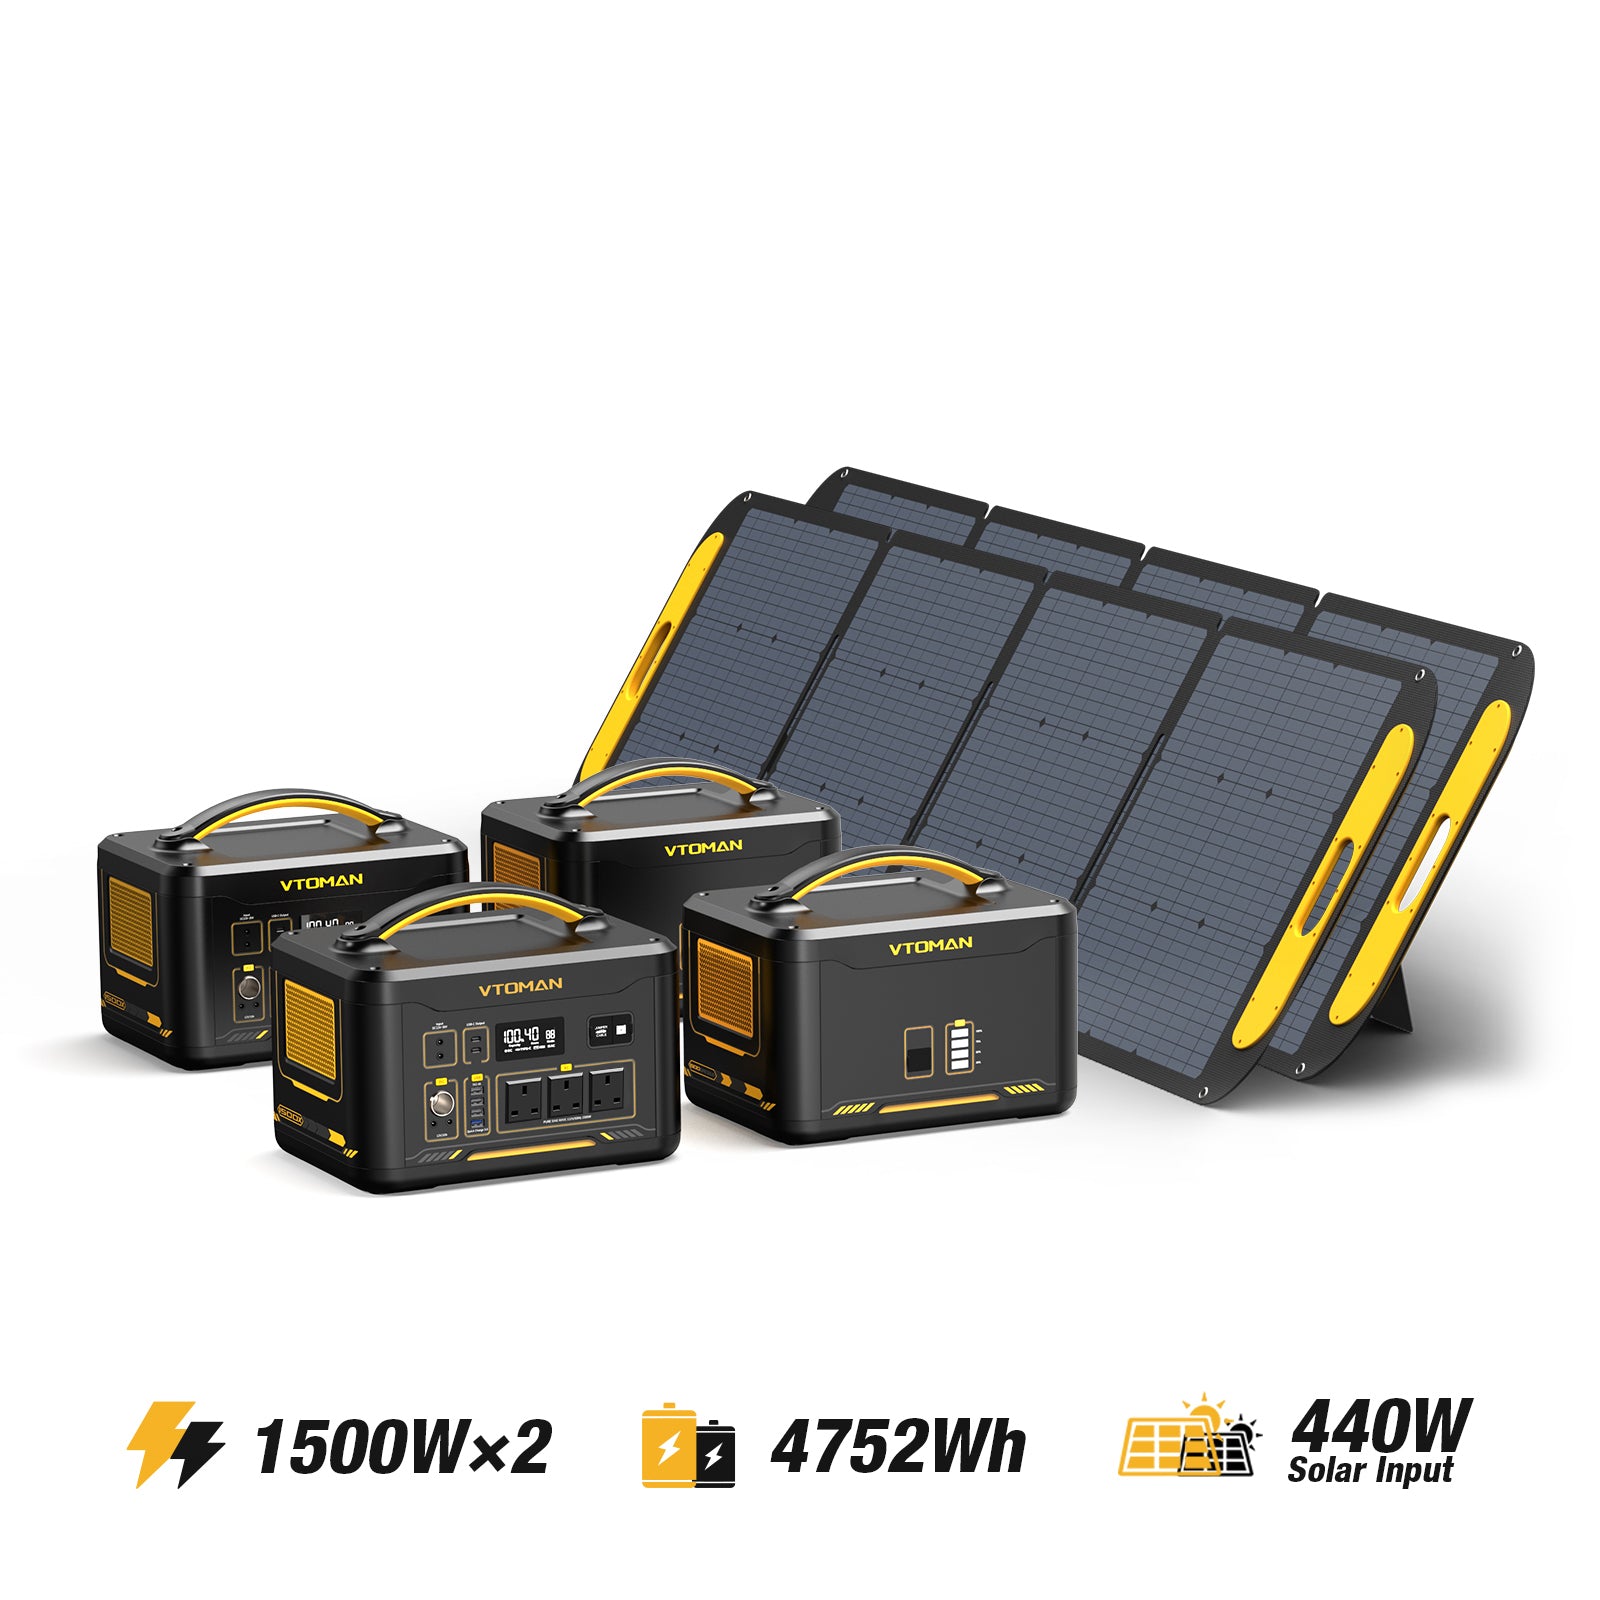 Jump 1500W/4752Wh 440W Solar Generator